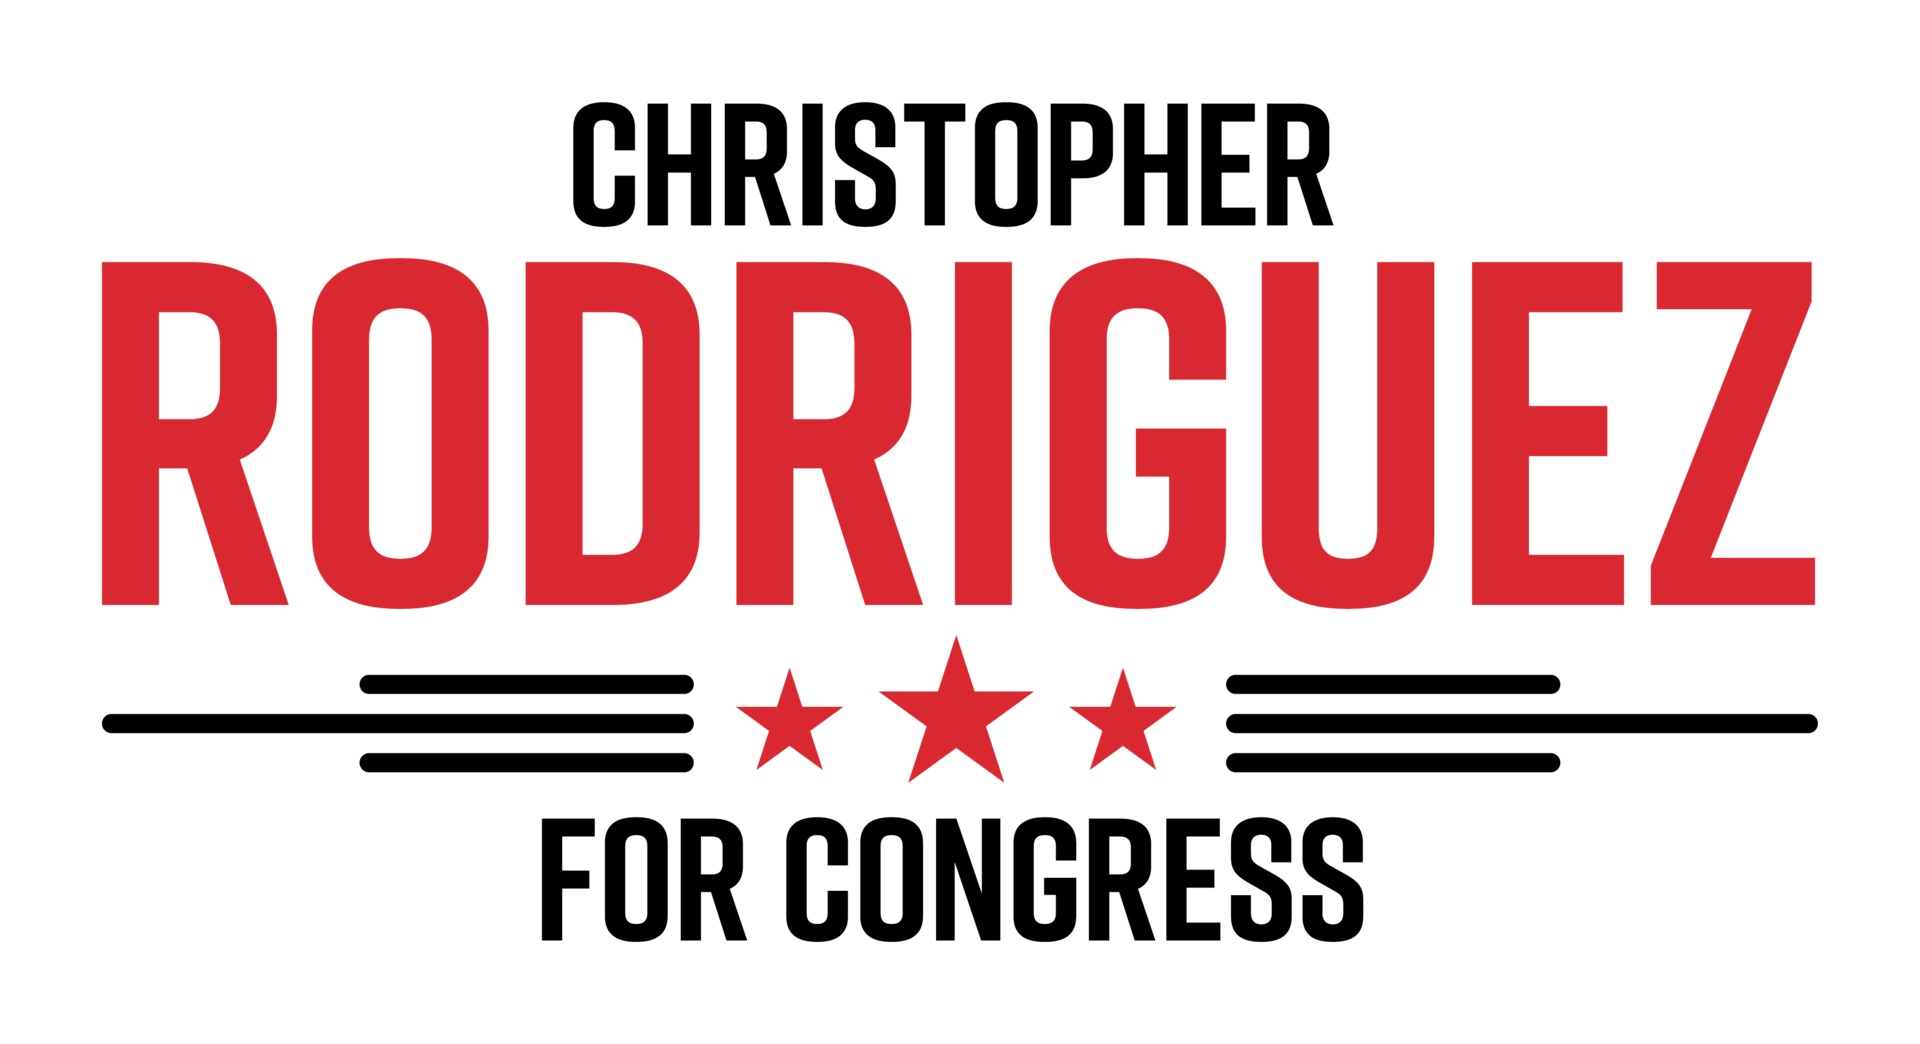 Rodriguez 21 01 logo final full color